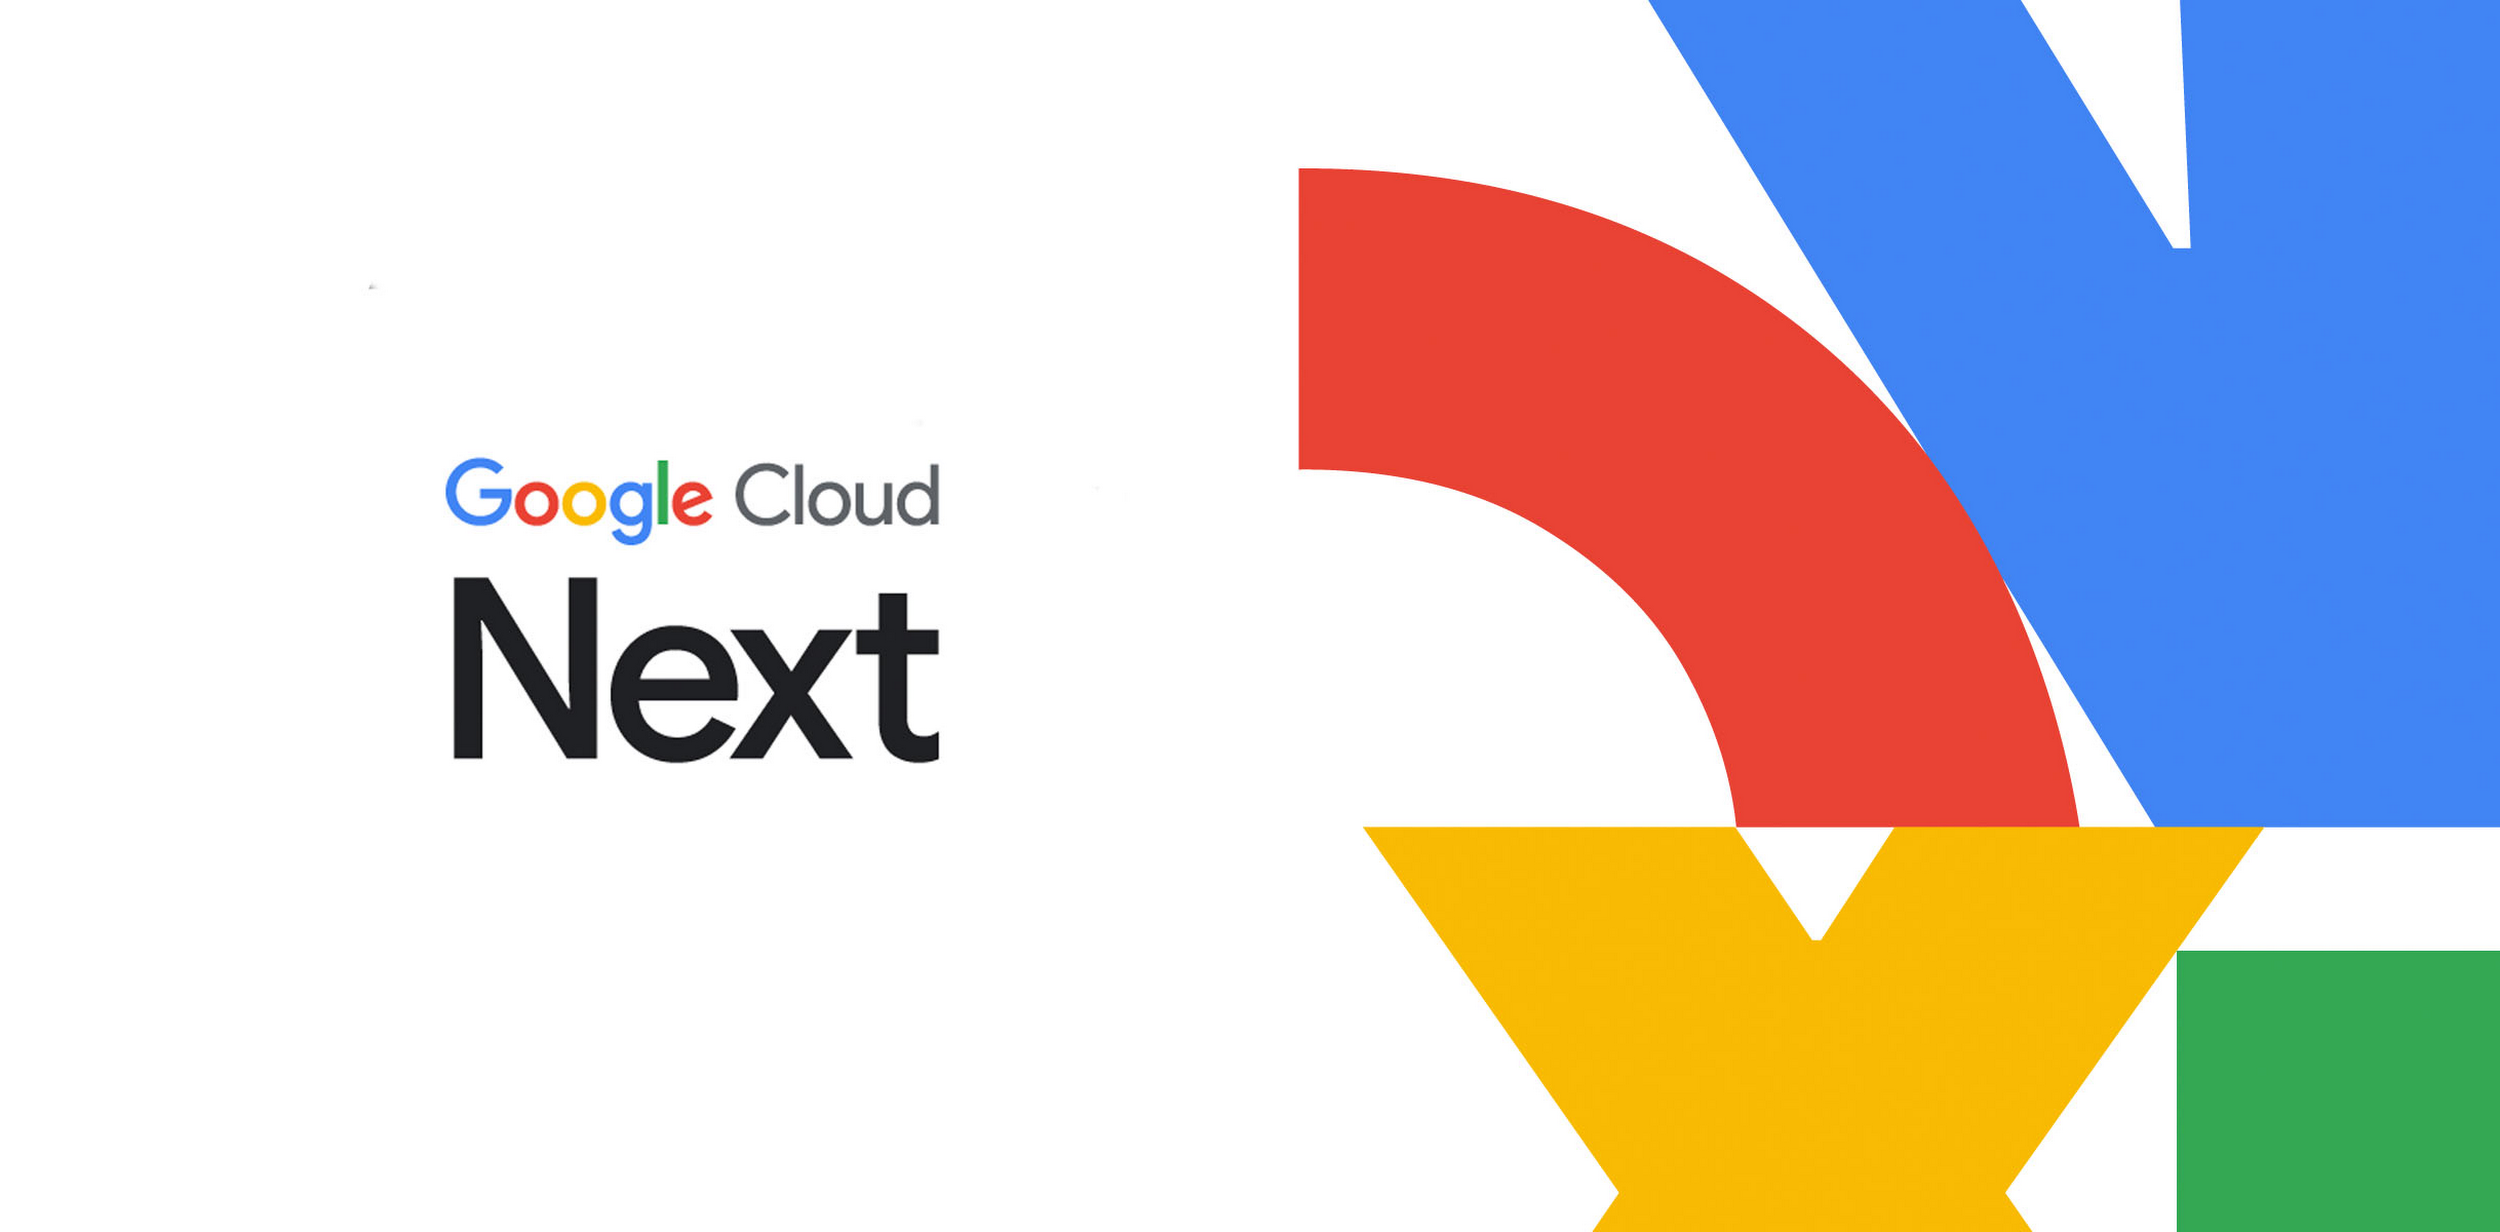 Google Cloud Next event graphic